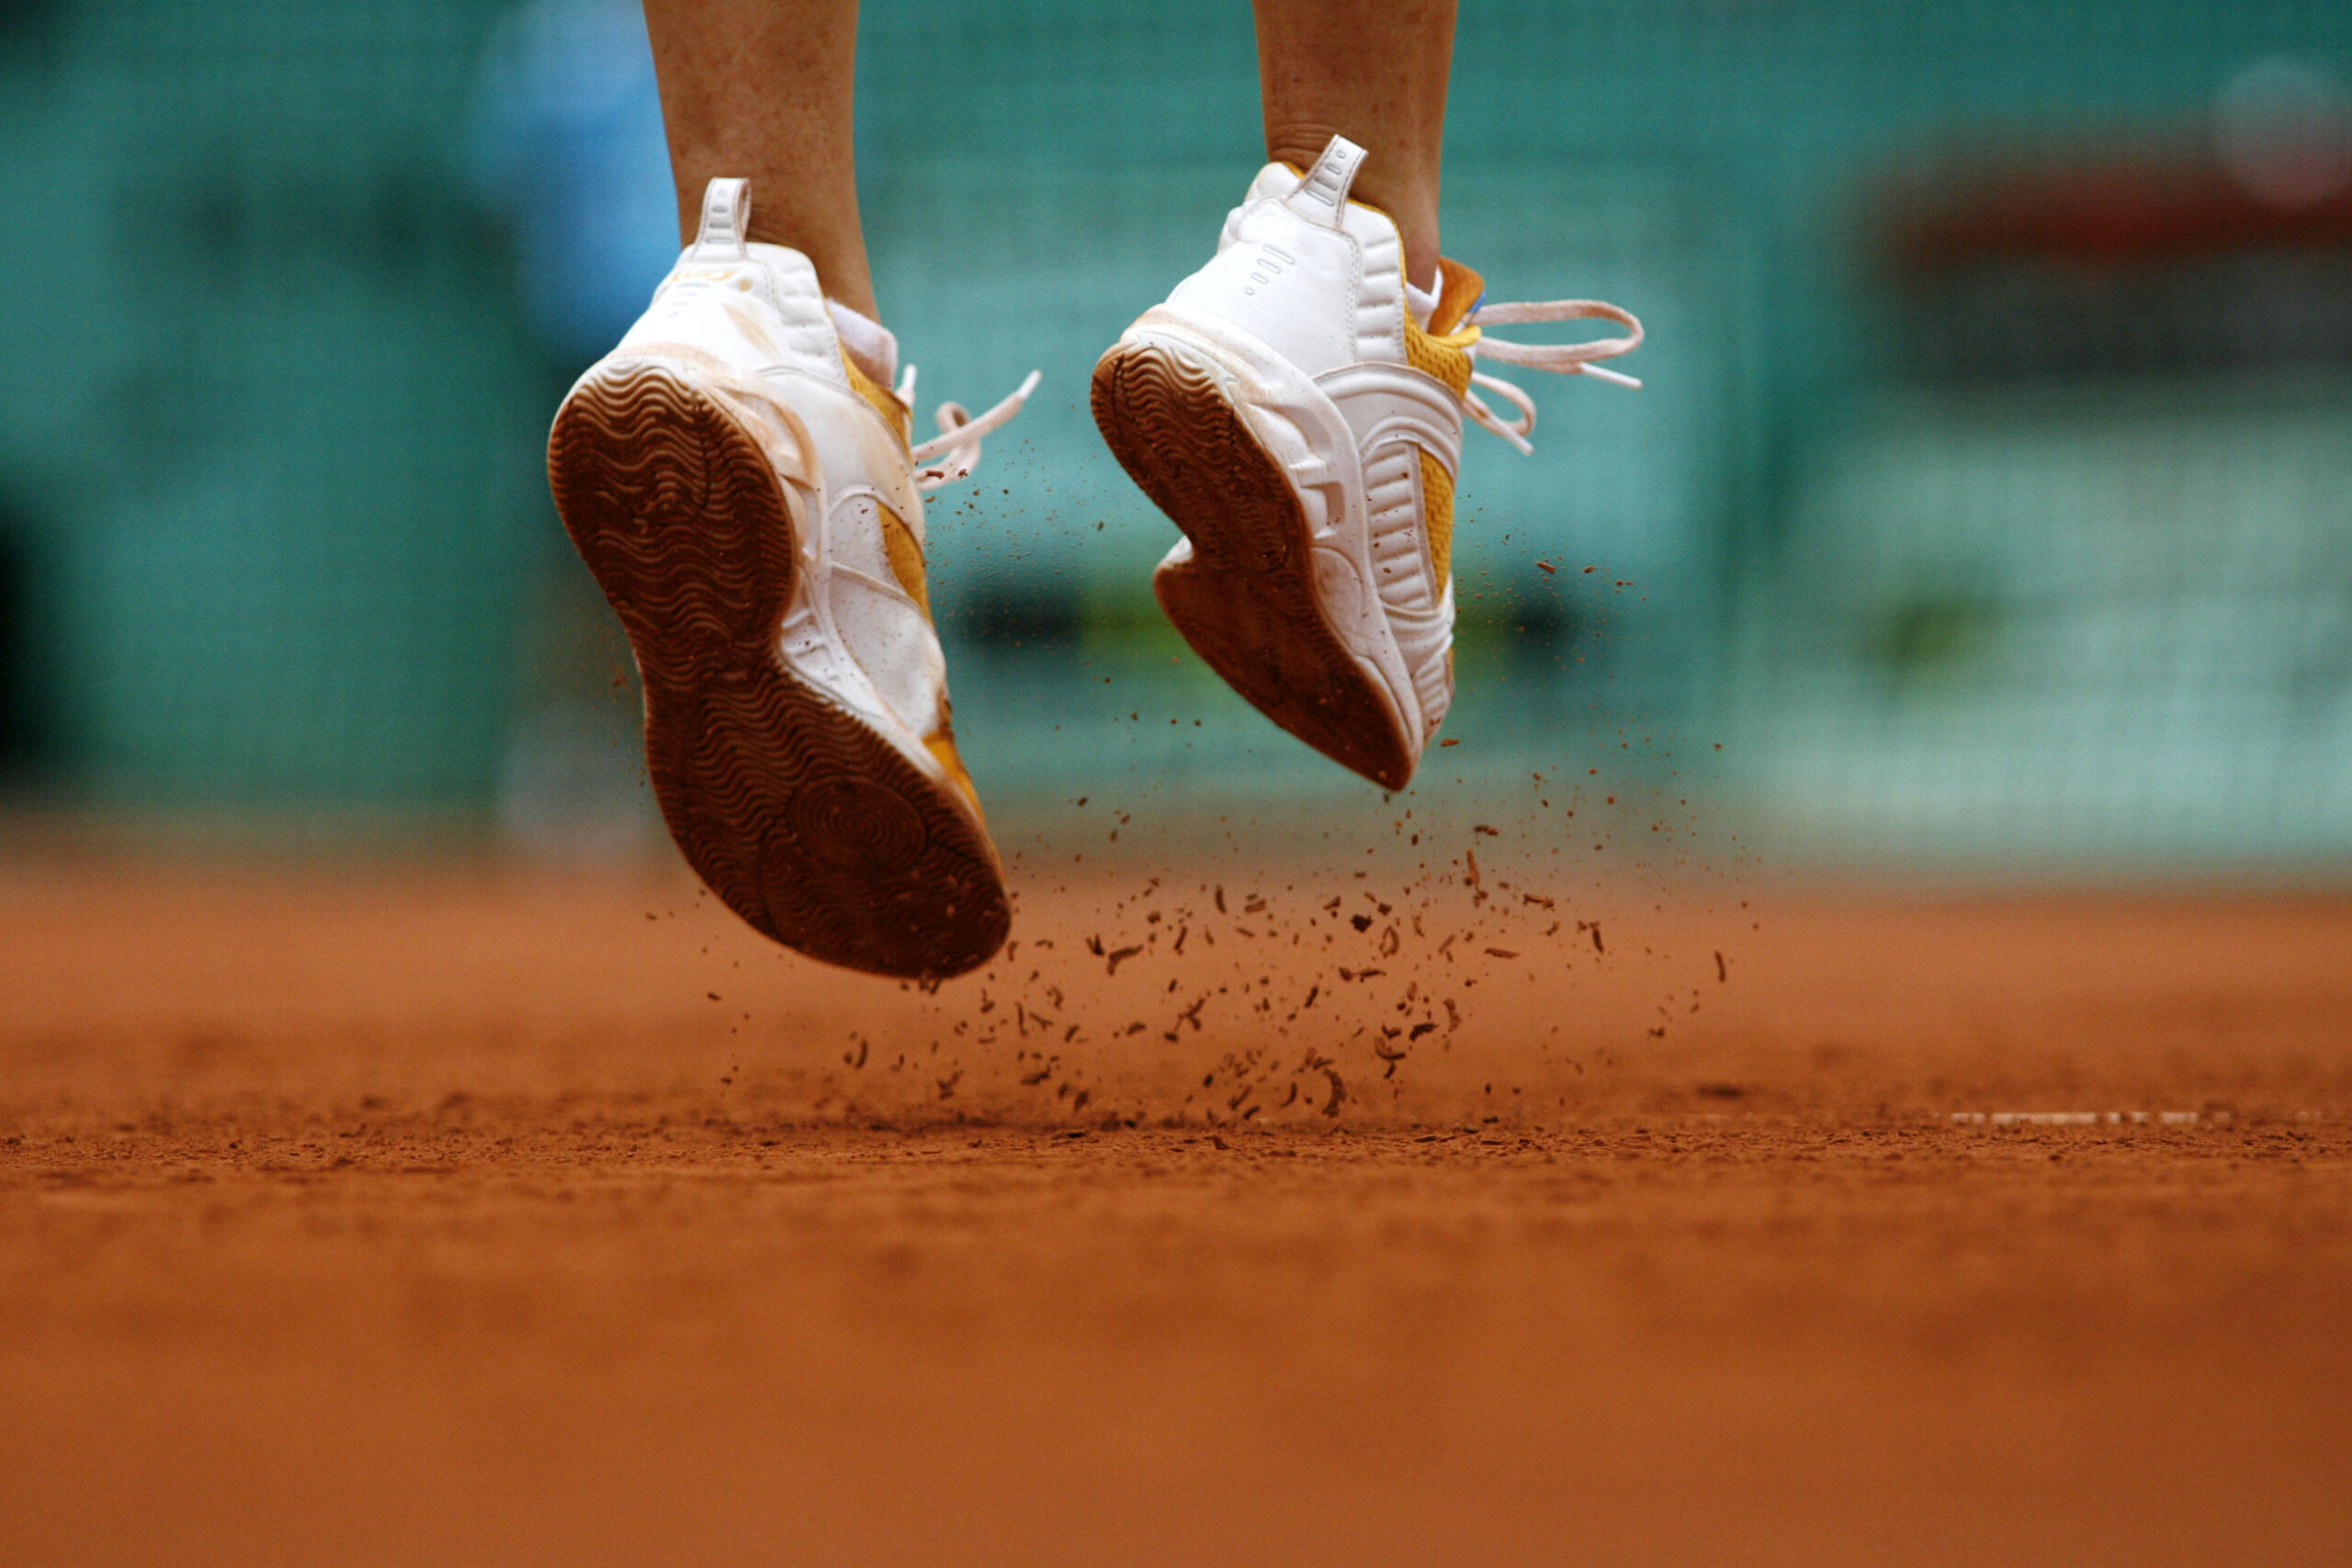 advantage-membership-the-all-court-tennis-club